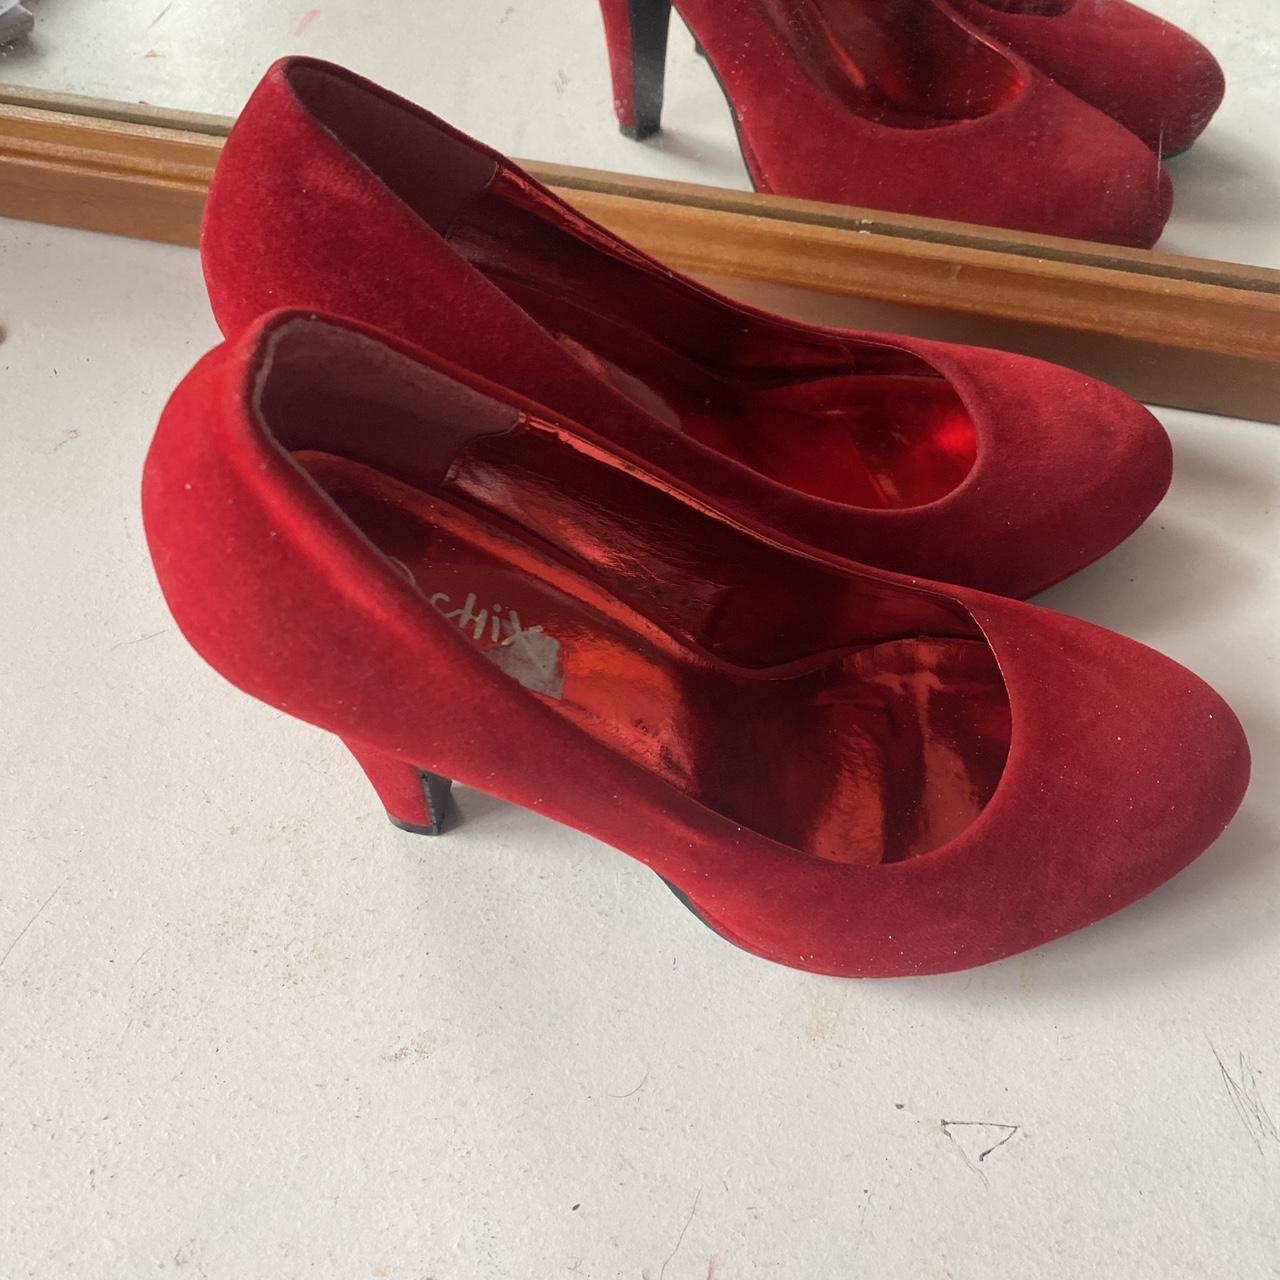 Chix red velvet high hill shoes women 4 37 these... - Depop